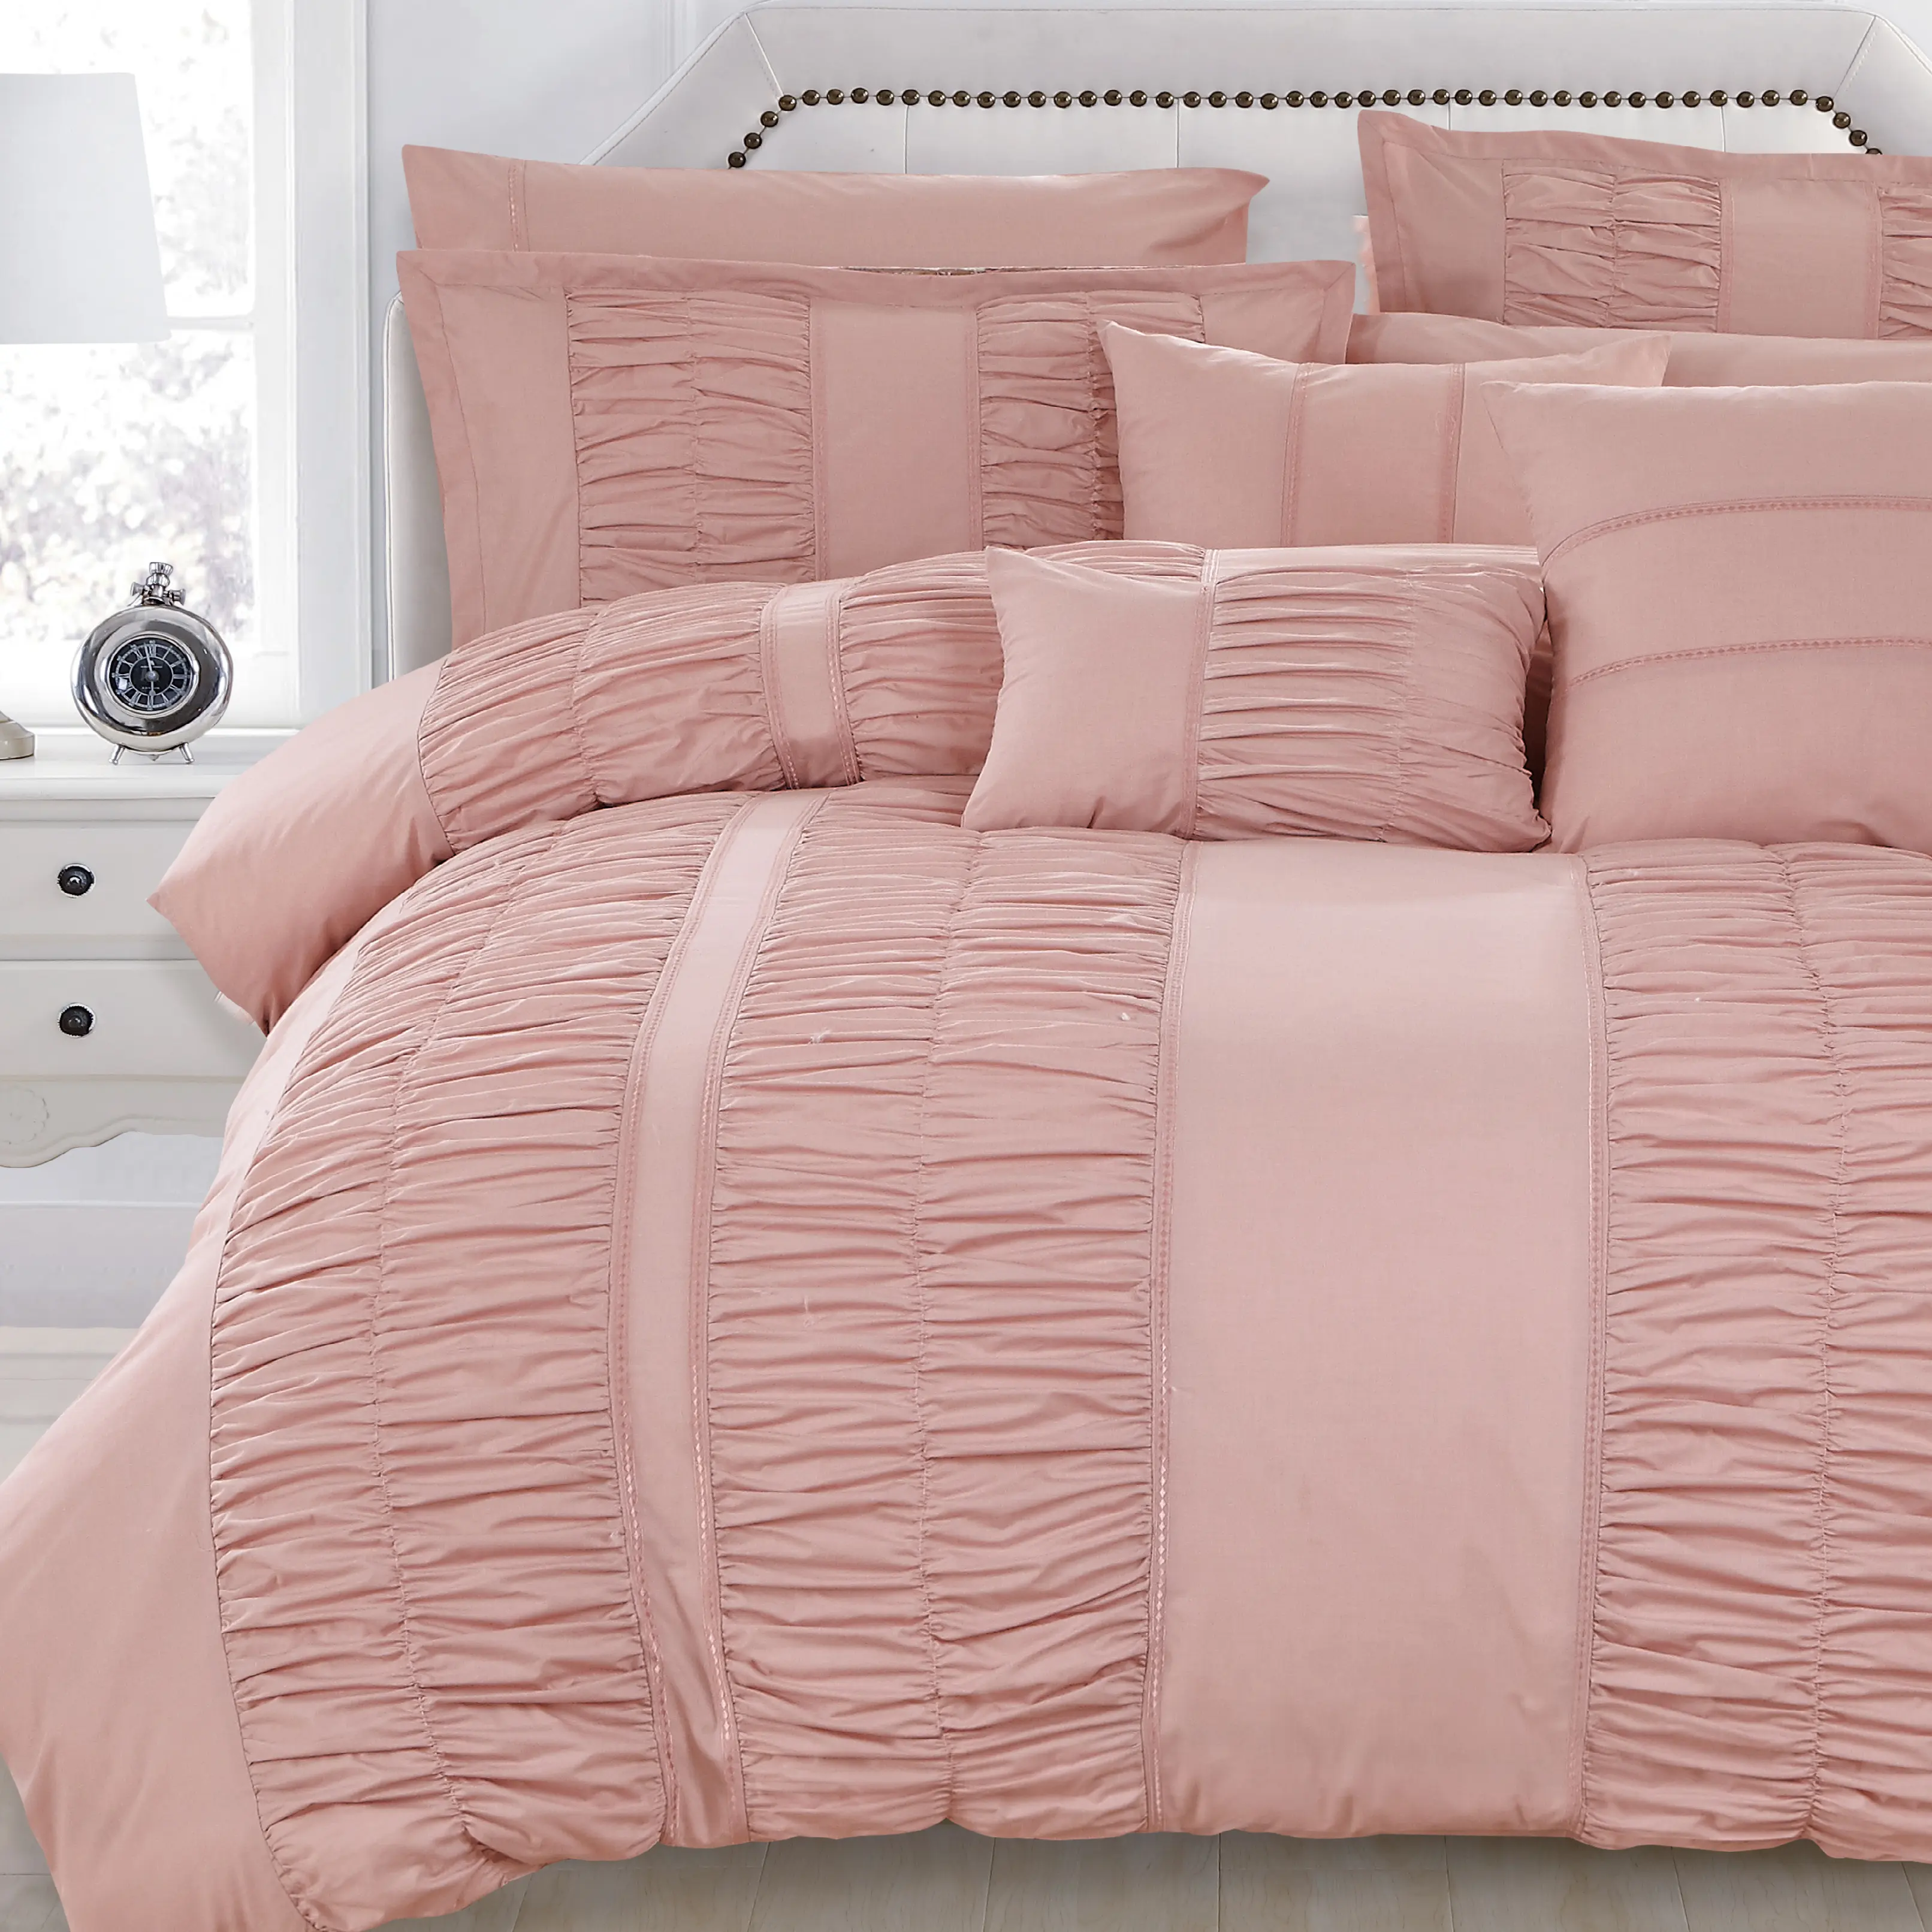 Wholesale Comforter Sets Bedding Jacquard Luxury Microfiber Queen Fold Bed Comforter